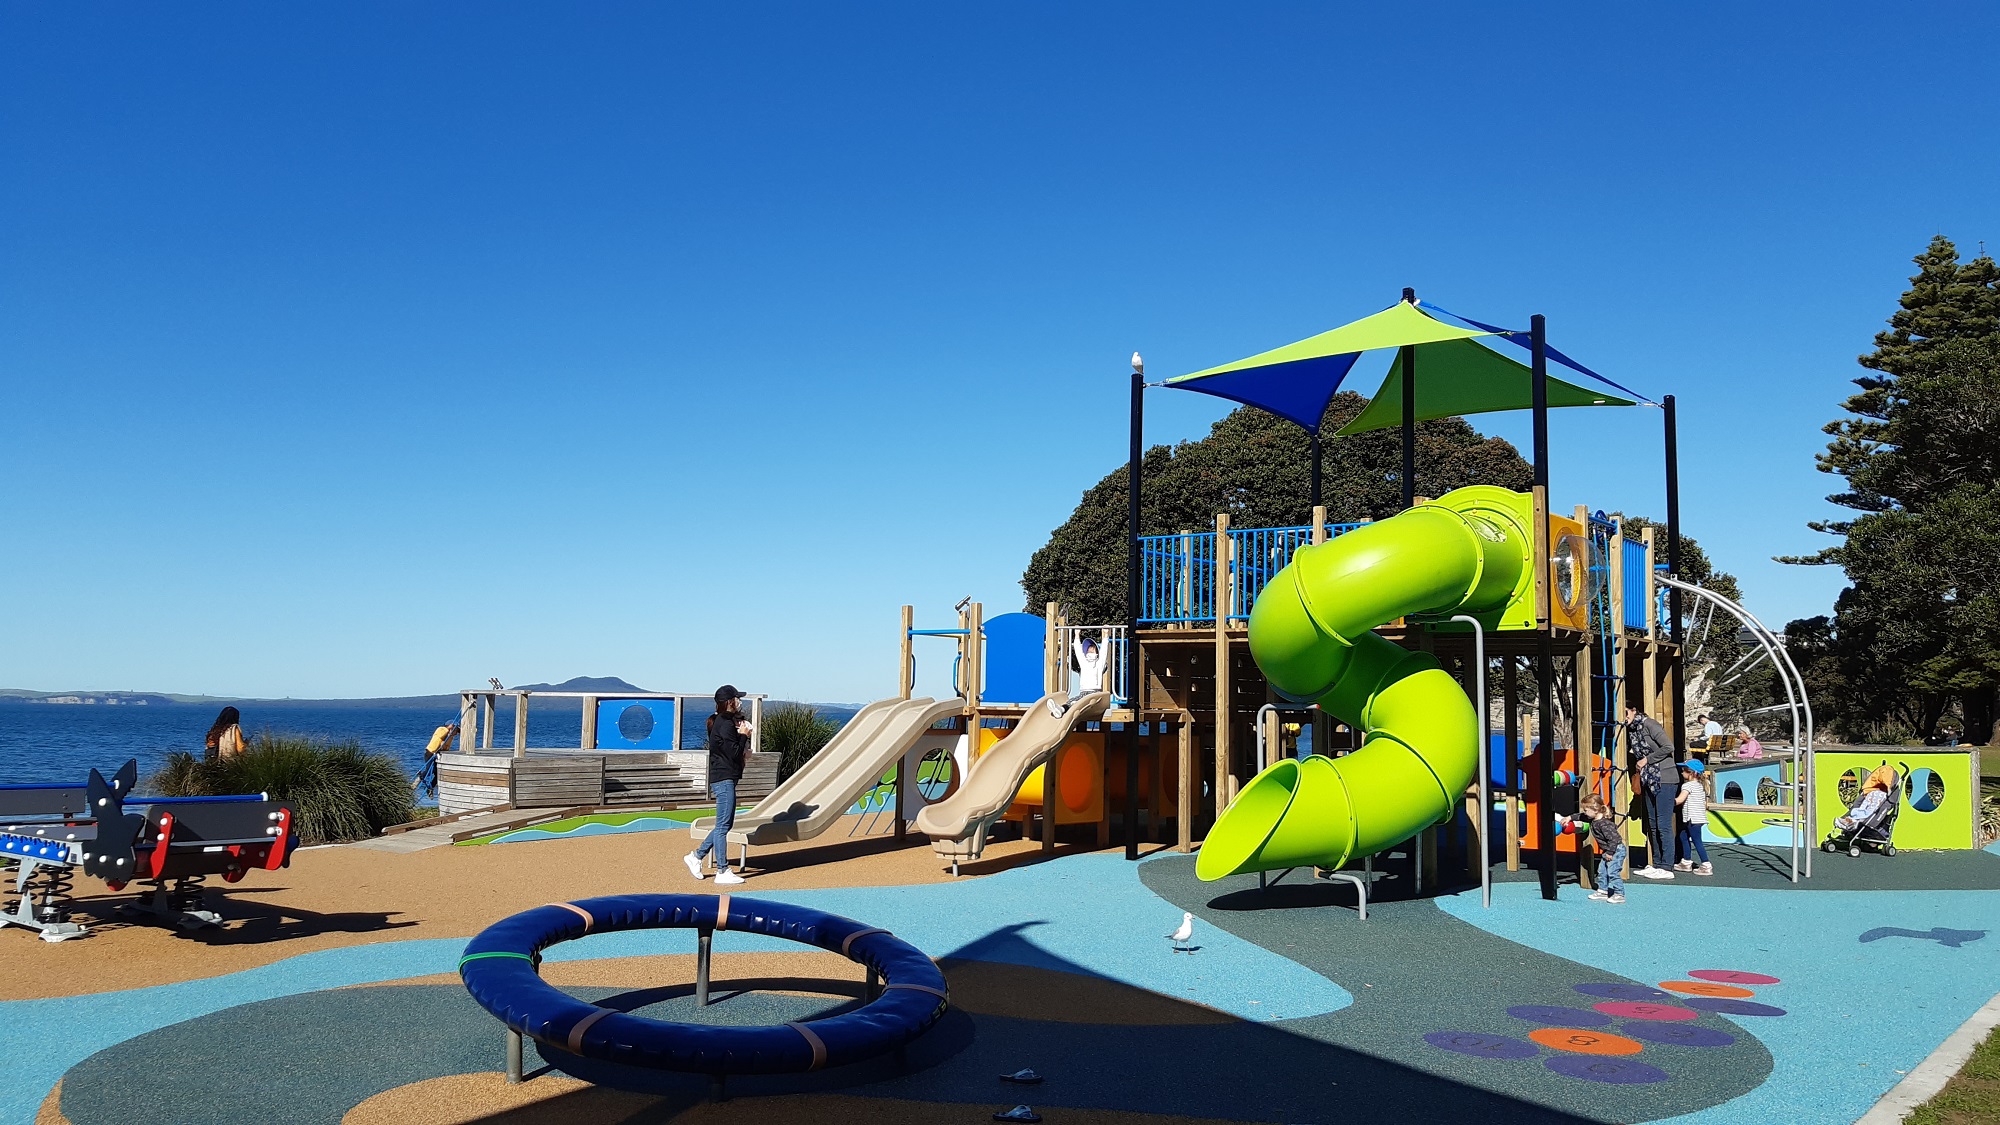 Browns Bay Beach Playground